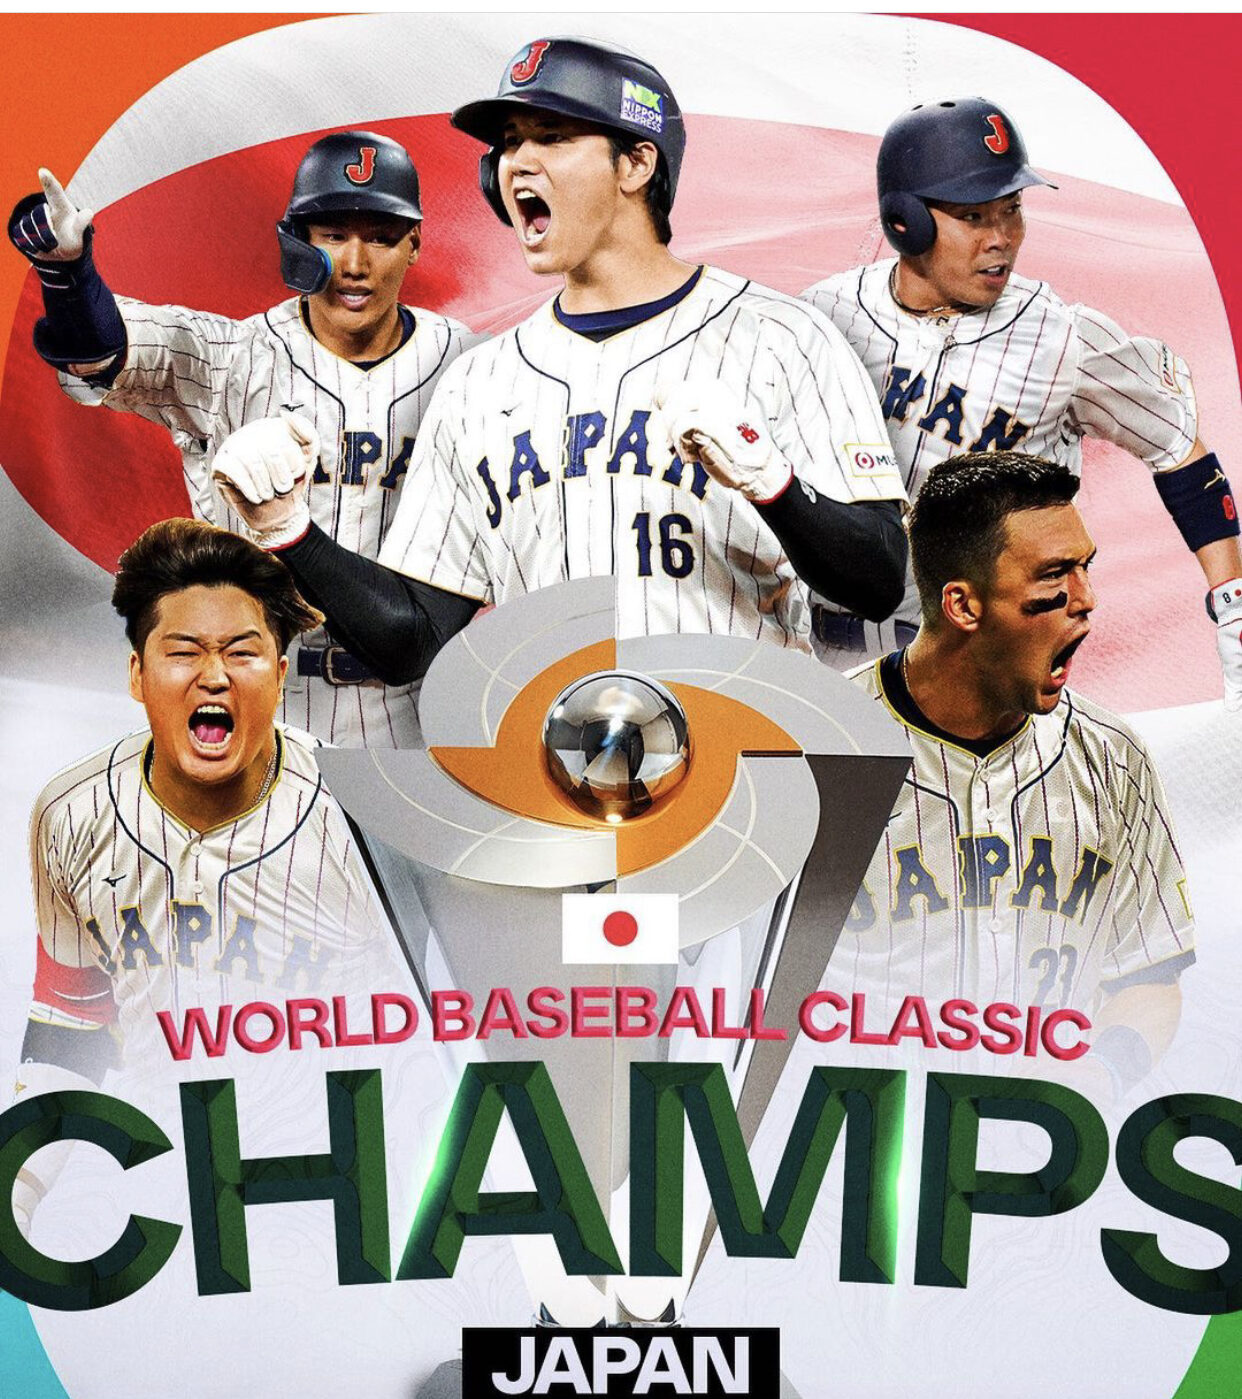 Japón gana el Clásico Mundial de Béisbol